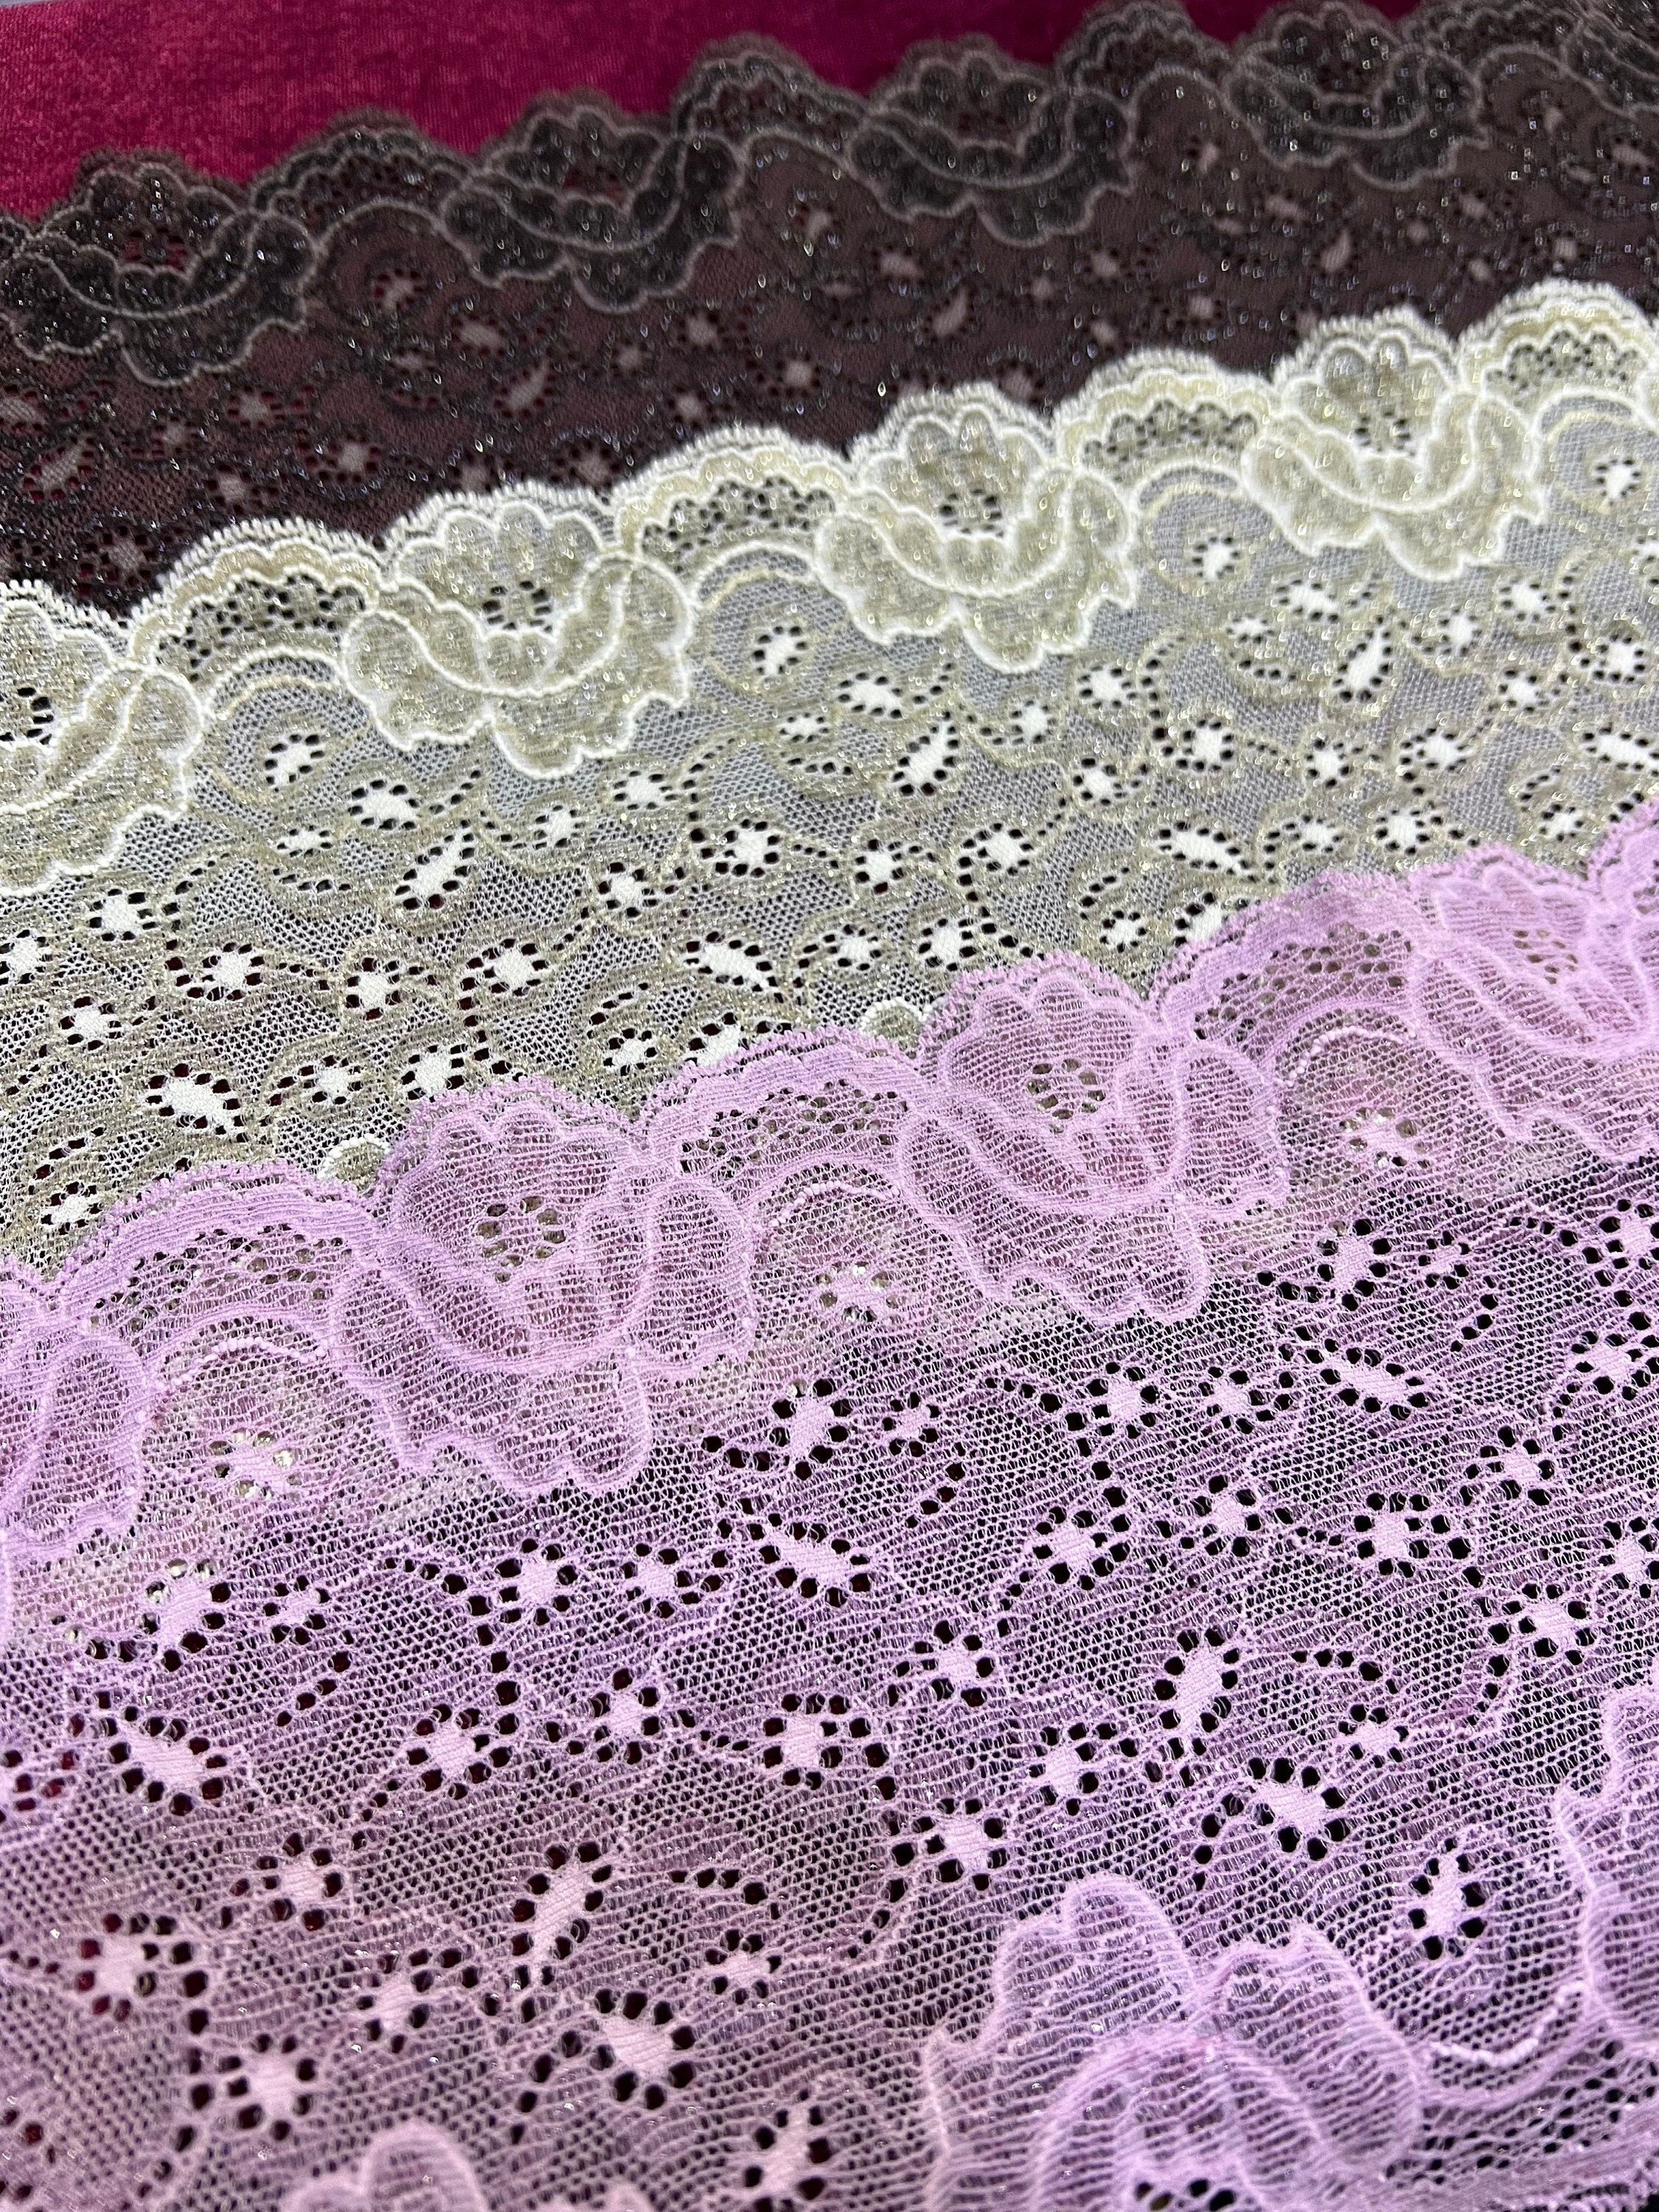 Delicate Lace Trim 13.3cm width, Dress lace, Lingerie, Headband, Sewing  lace, French lace, lurex lace, stretch lace, 5” lace, wide lace